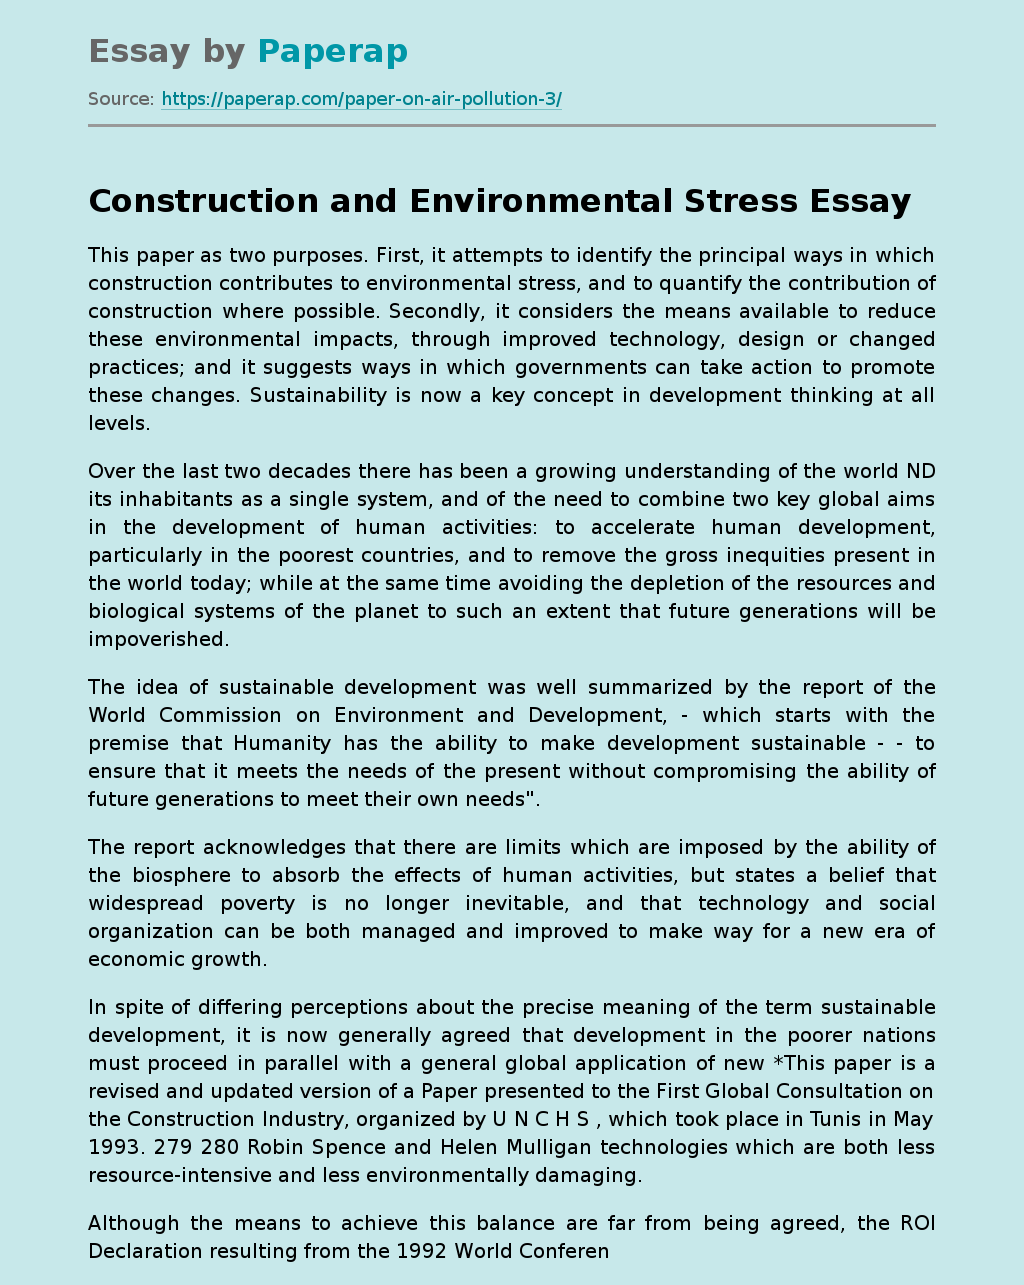 Construction and Environmental Stress